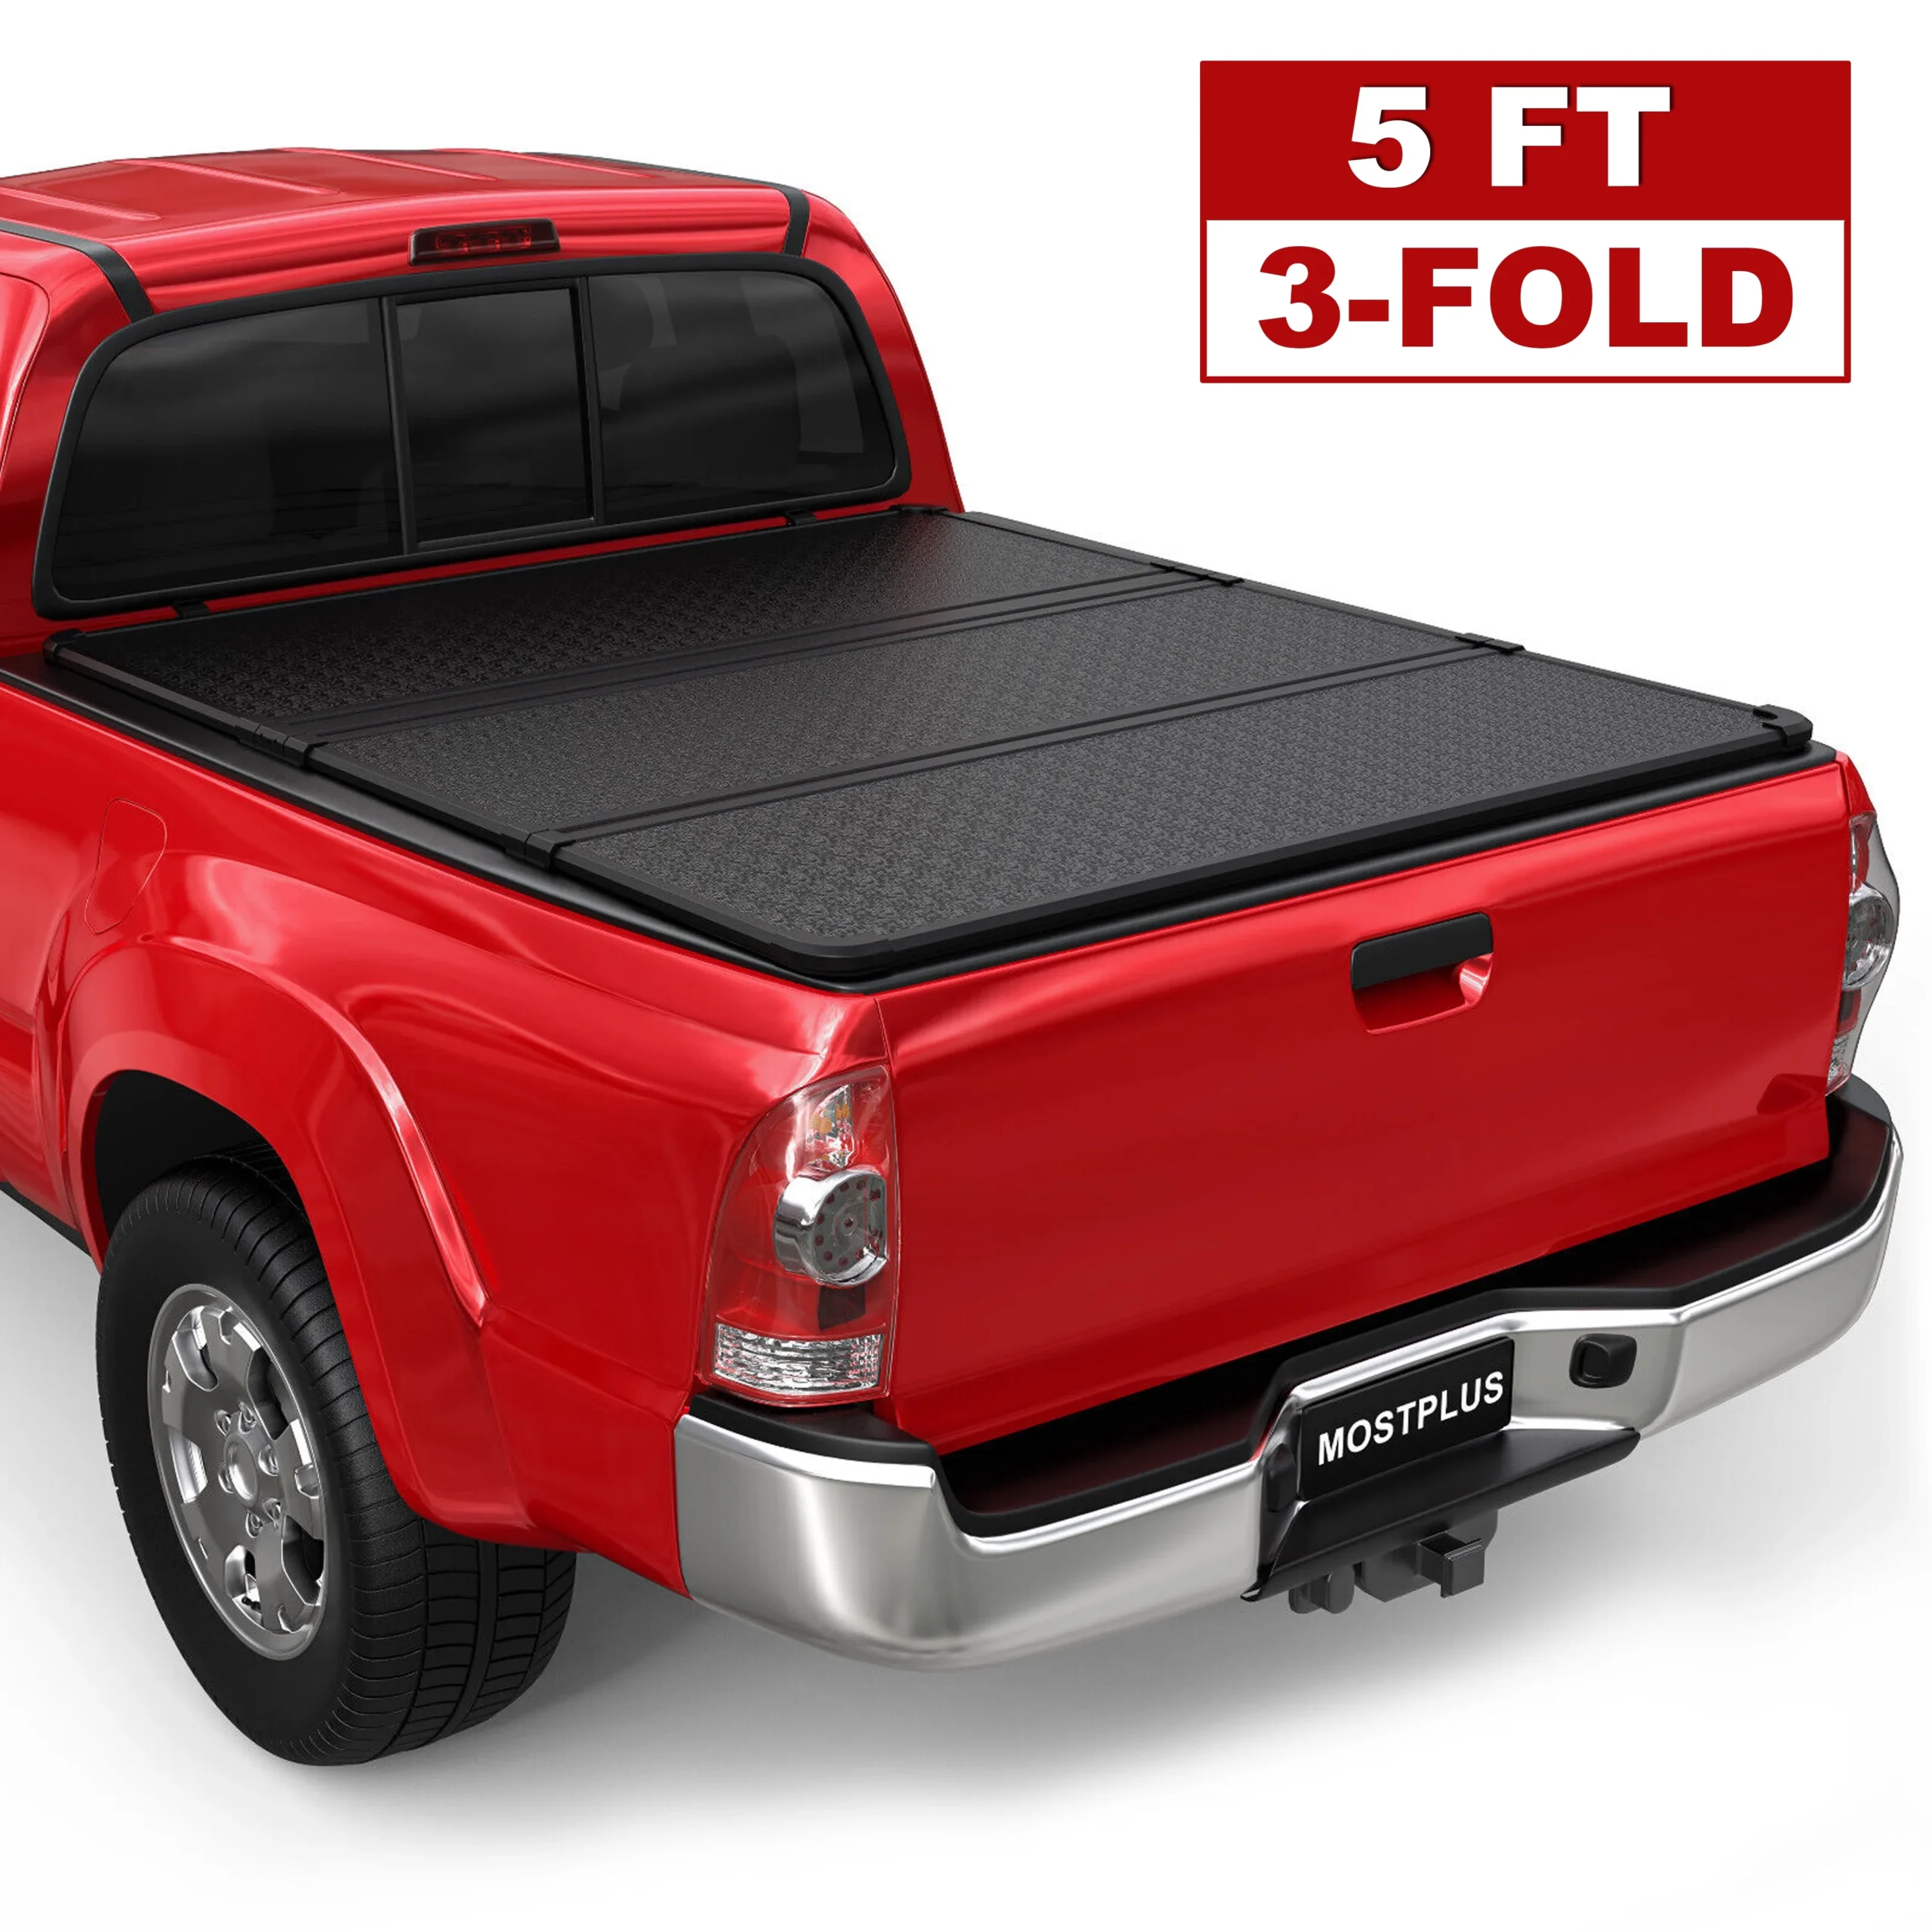 MOSTPLUS-Tri-Fold-5FT-Hard-Truck-Bed-Tonneau-Cover-For-2005-2015-Toyota-Tacoma-On-Top_14ed9d47-fbeb-49ba-9550-3bb1298e9d60.b15cec57e73d1588695c9b06ae2aa0a3